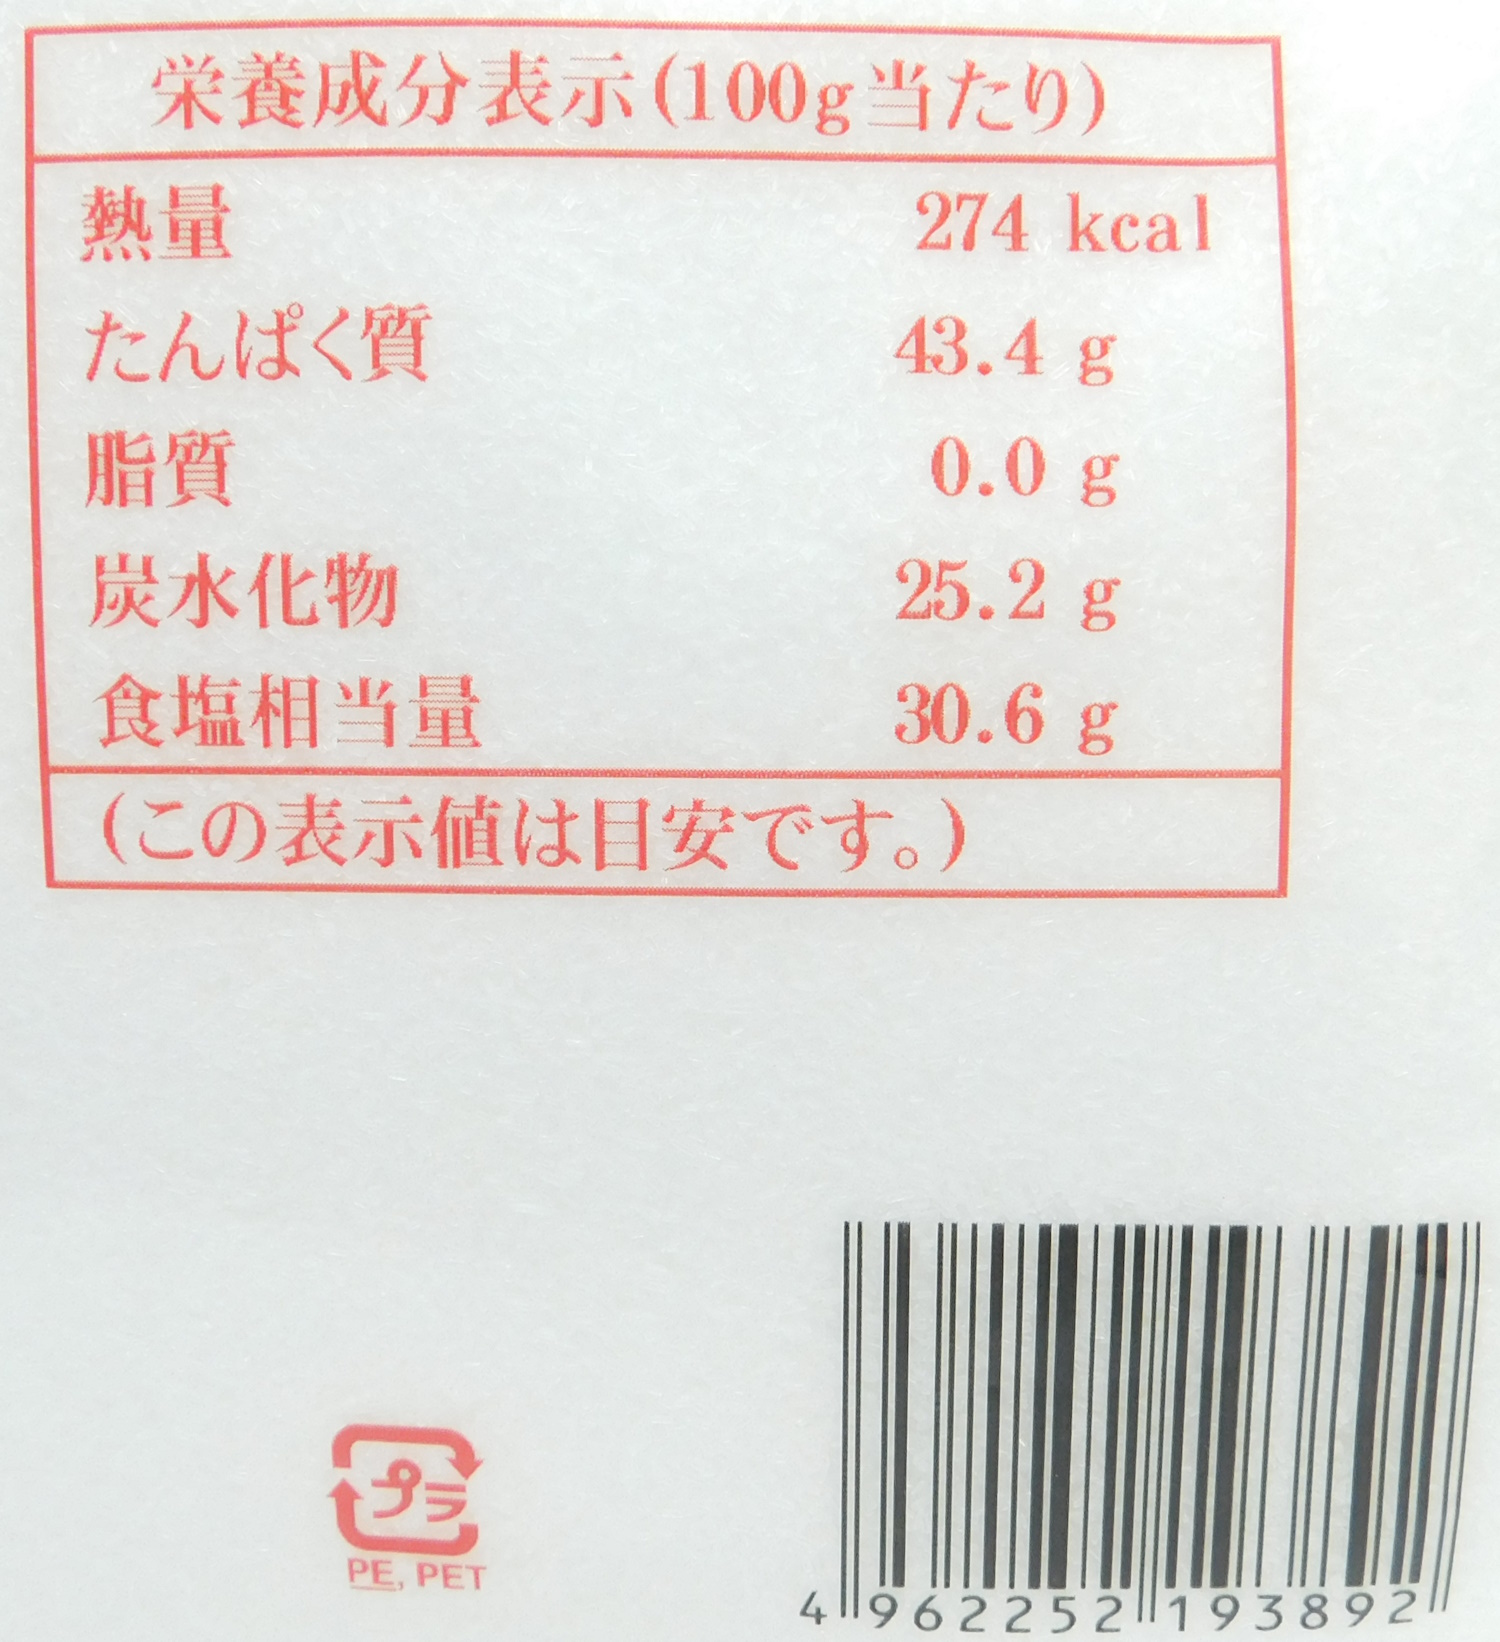  free shipping circle pine glutamine acid soda ( Vietnam production ) 1kg